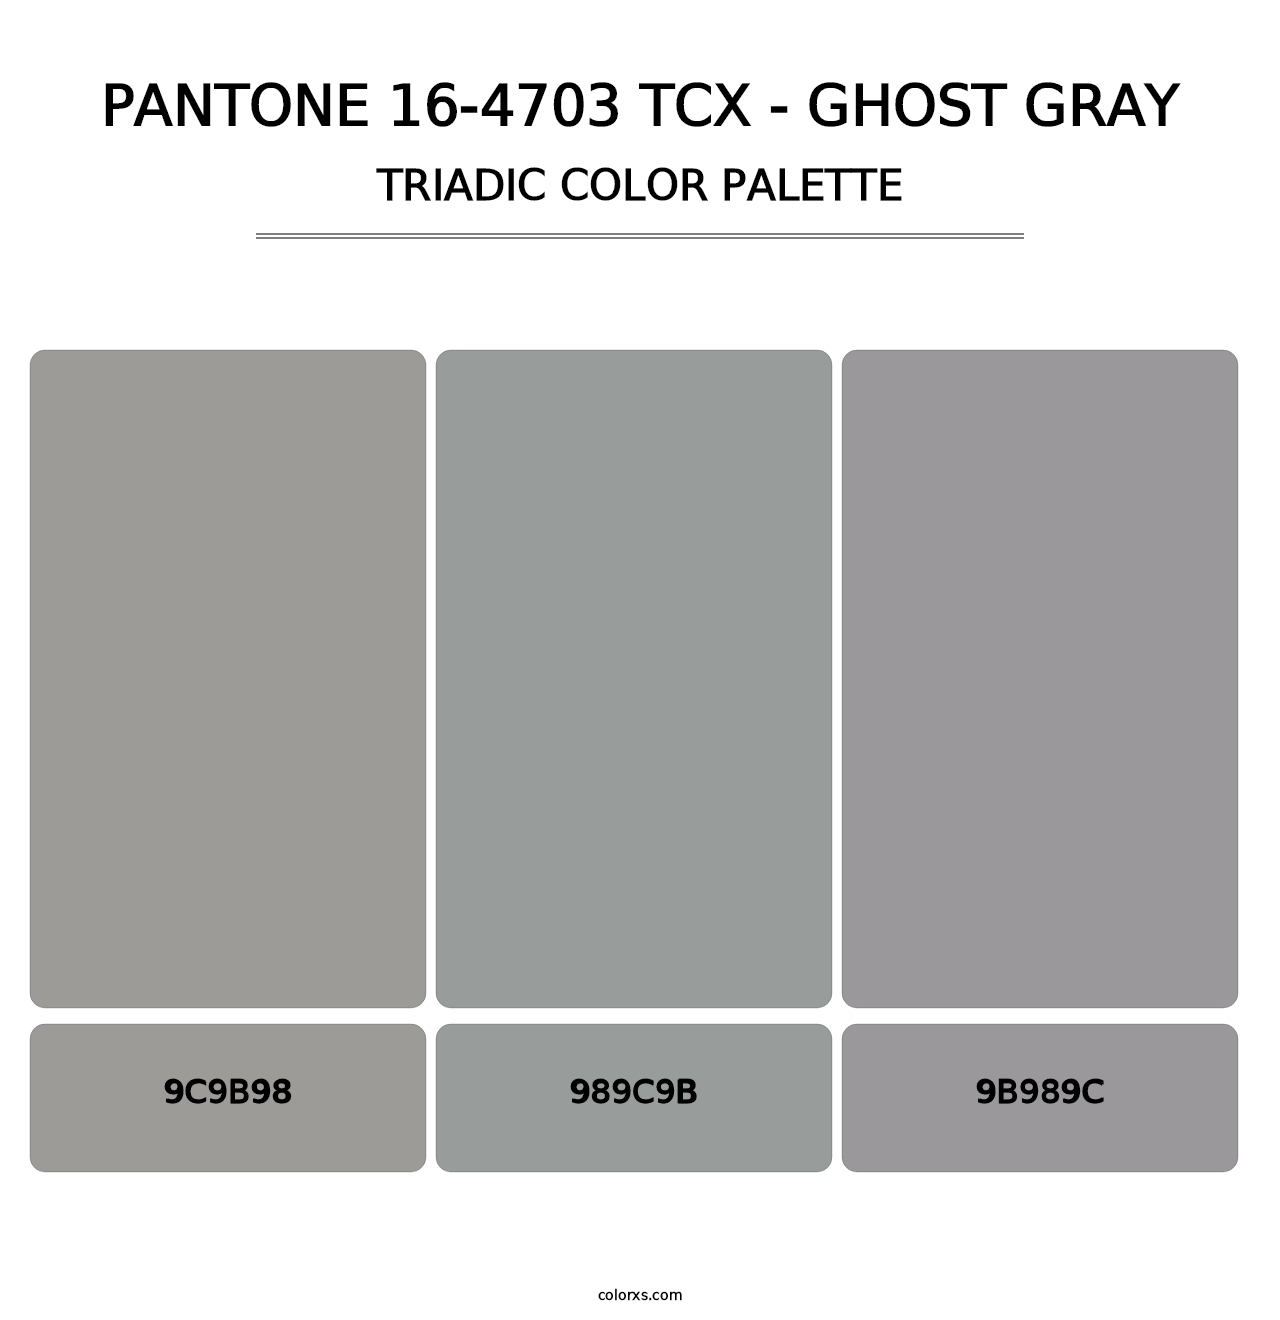 PANTONE 16-4703 TCX - Ghost Gray - Triadic Color Palette